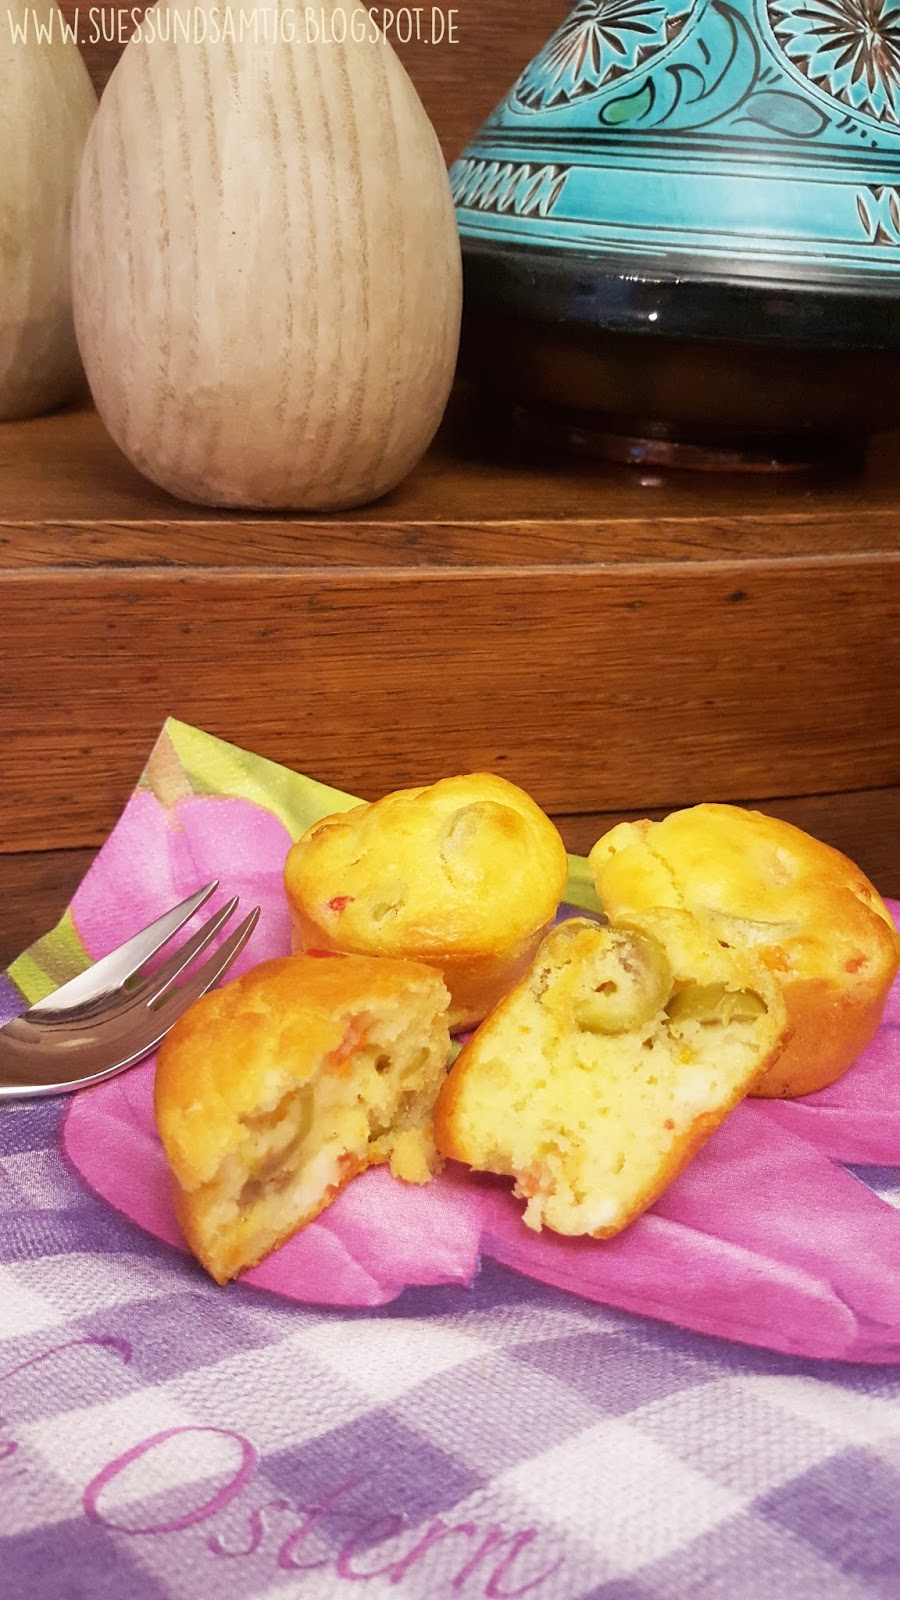 Süß &amp; Samtig: Oliven-Feta-Muffins mit getrockneten Tomaten